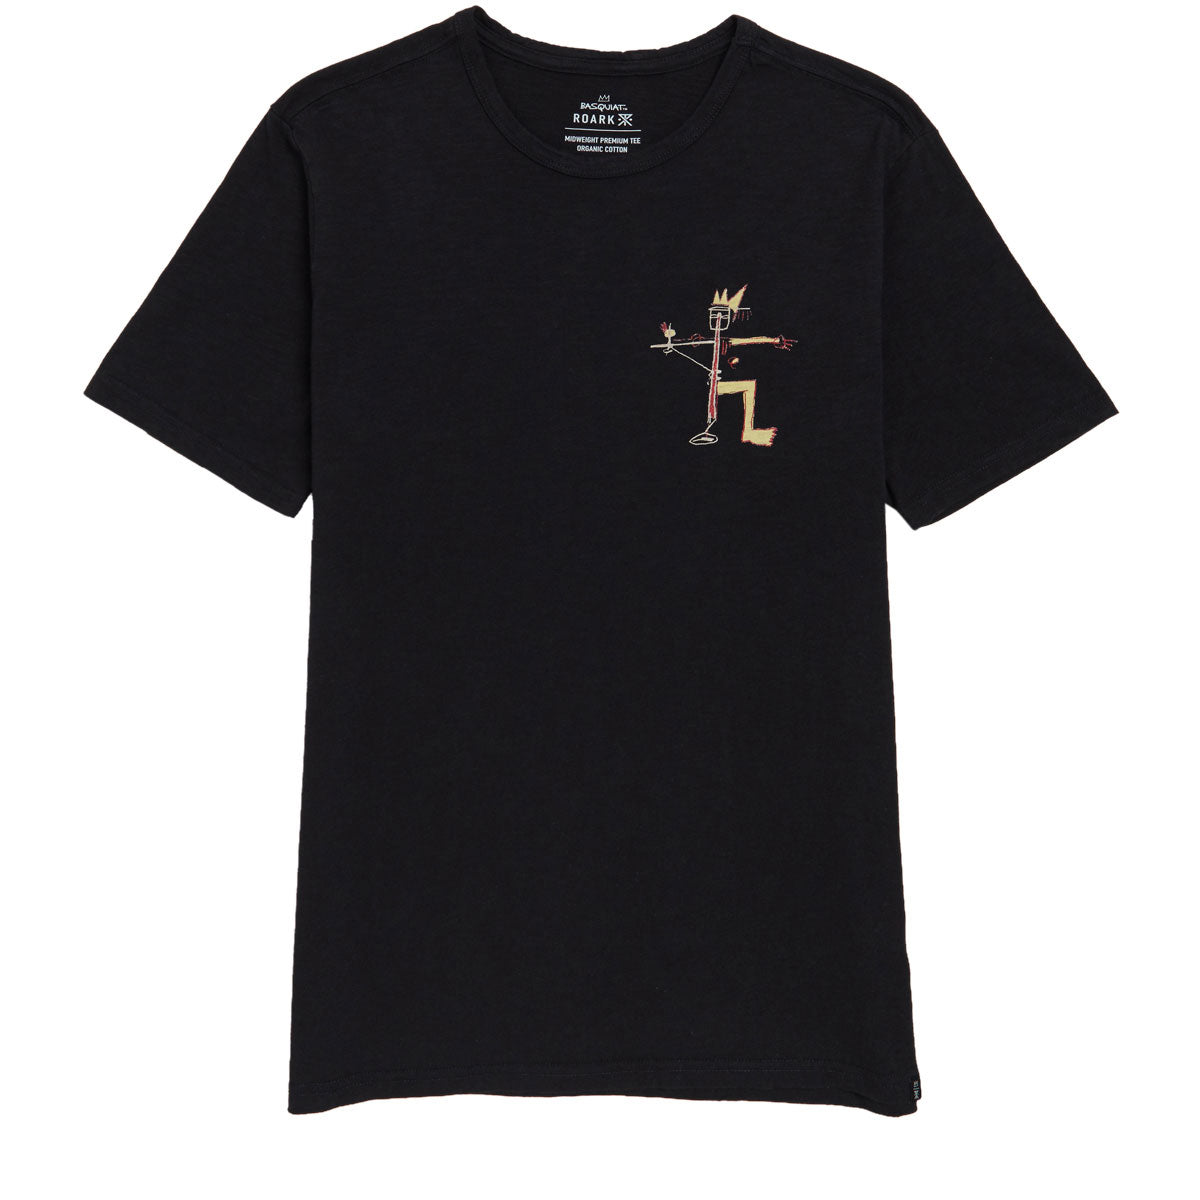 Roark x Basquiat Thesis T-Shirt - Black image 1